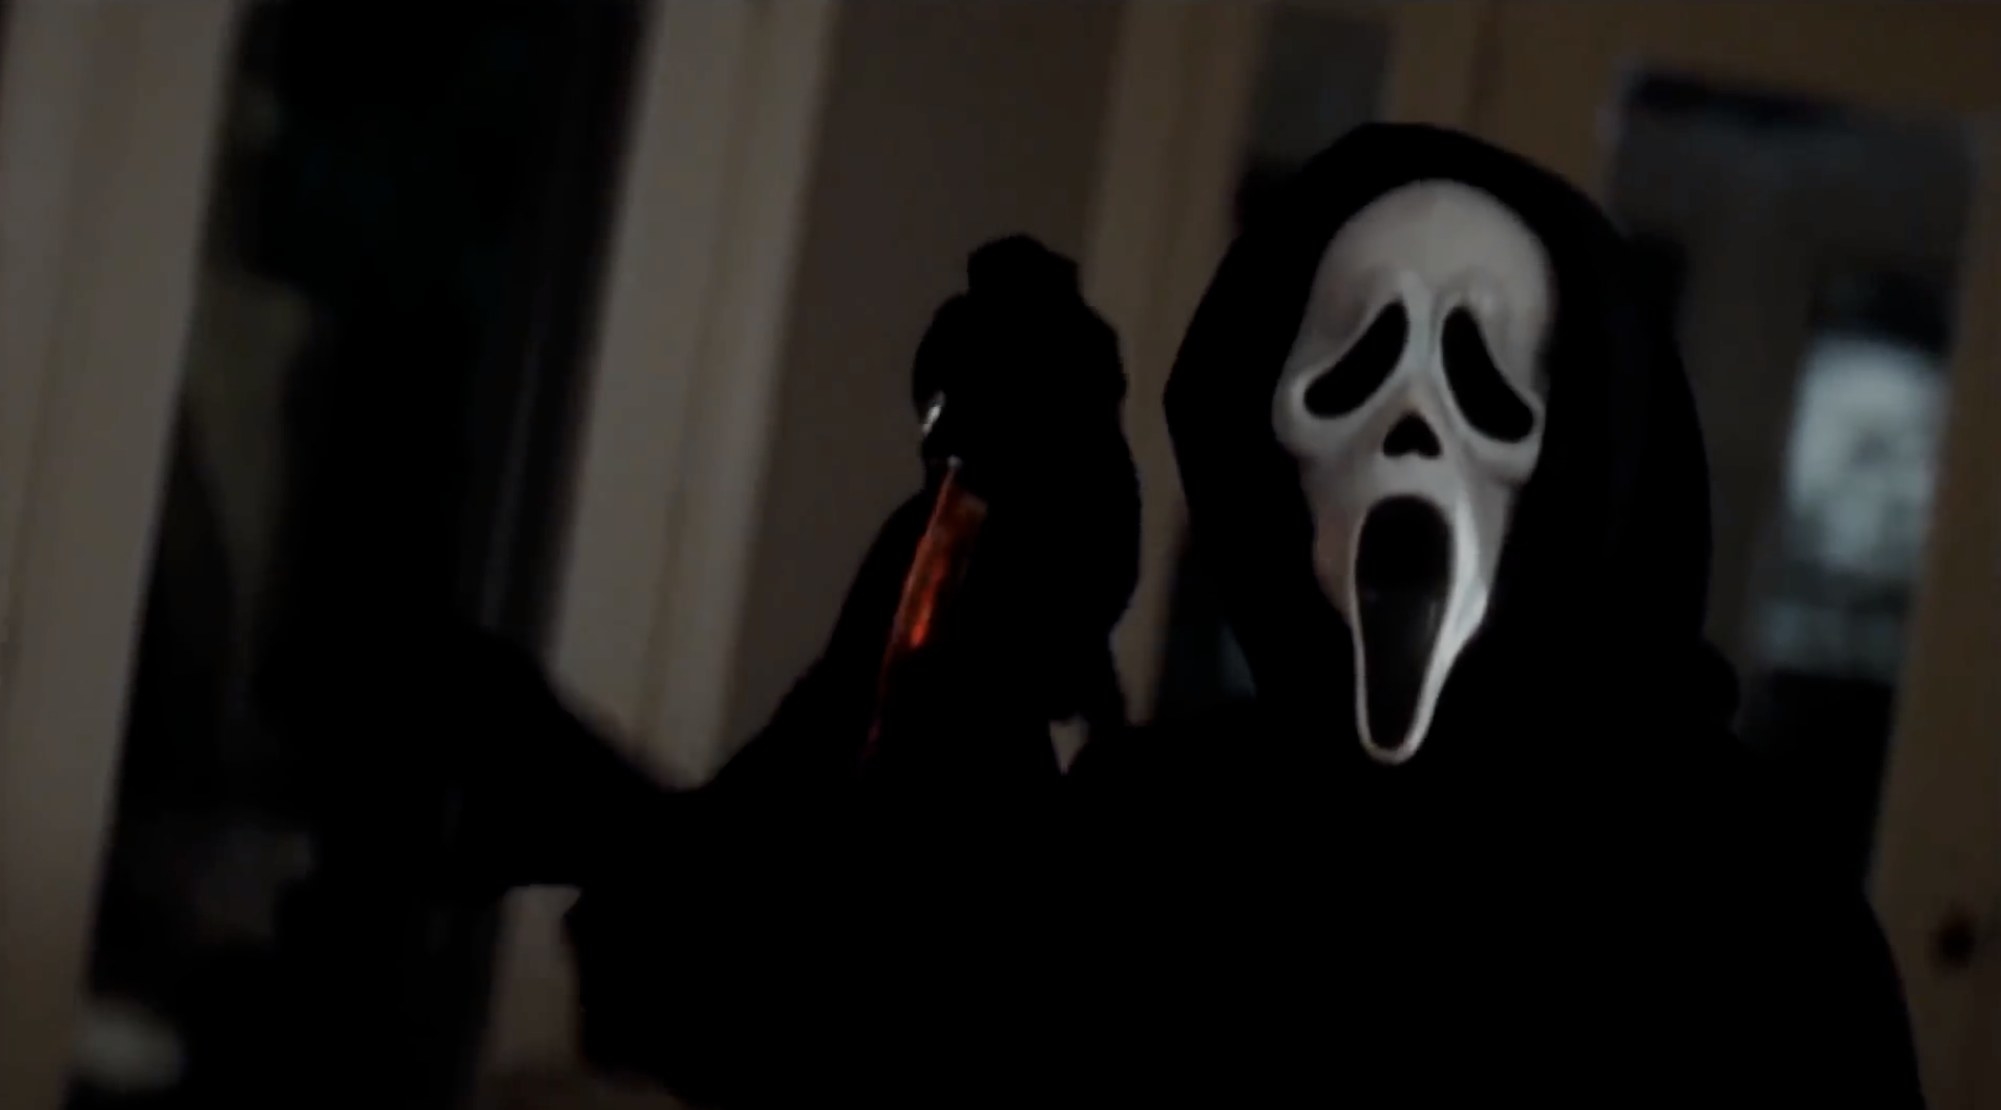 Ghostface with a knife in Scream 4